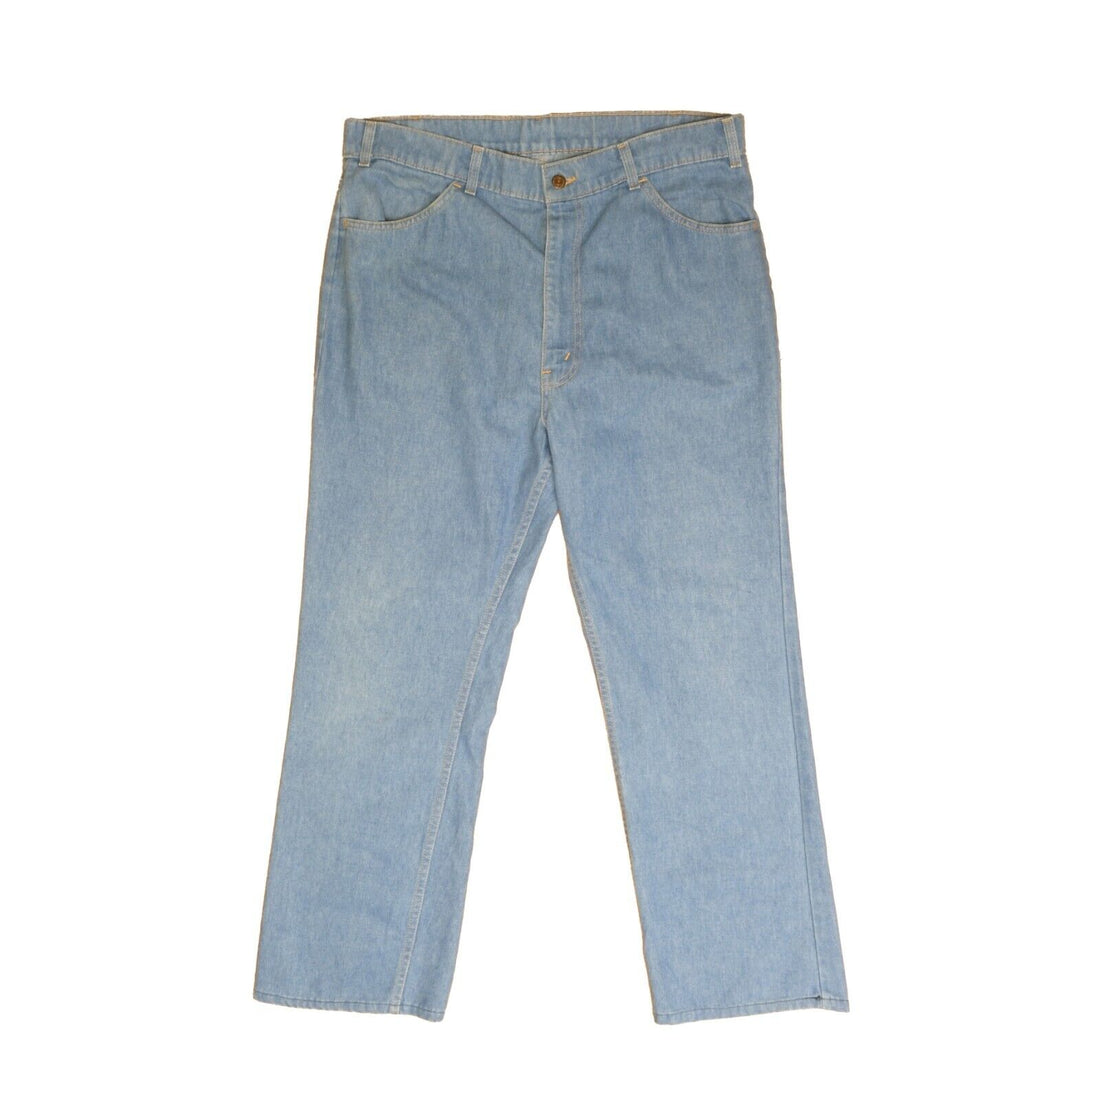 Vintage Levi Strauss Denim Jeans Pants Size 38W X 30L Orange Tab 40547 0812